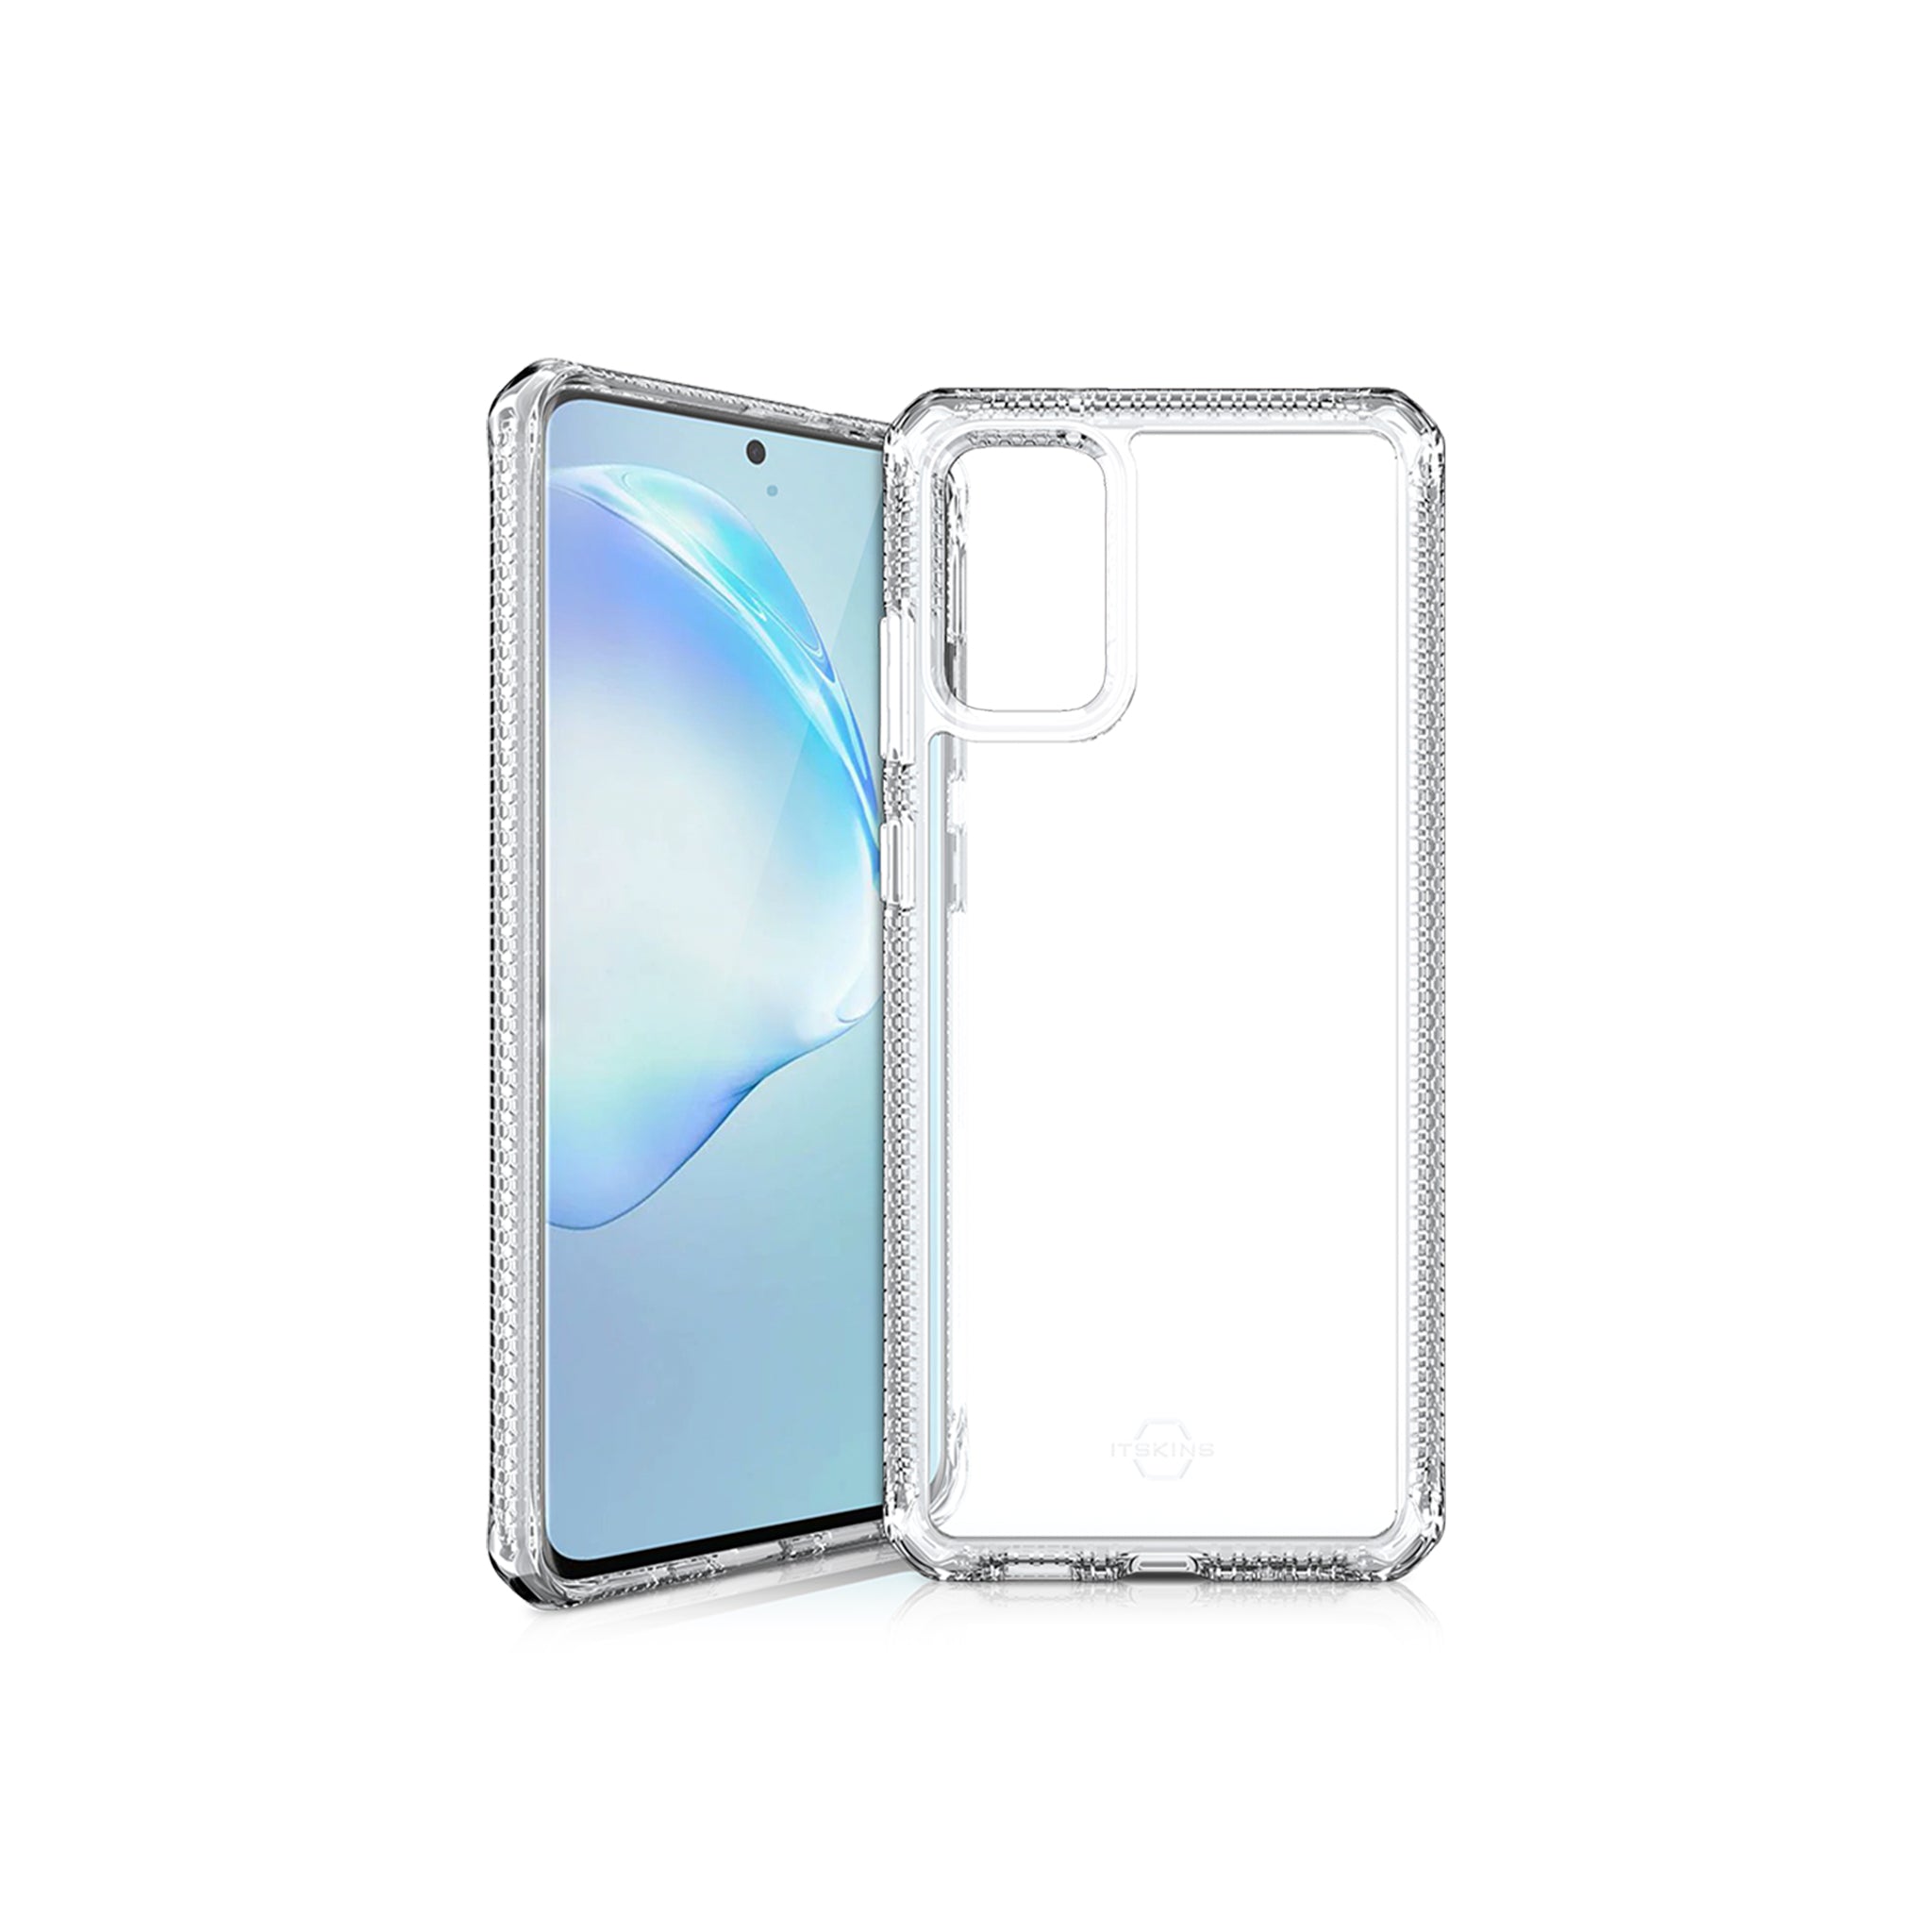 Itskins - Hybrid Clear Case For Samsung Galaxy S20 Plus - Transparent